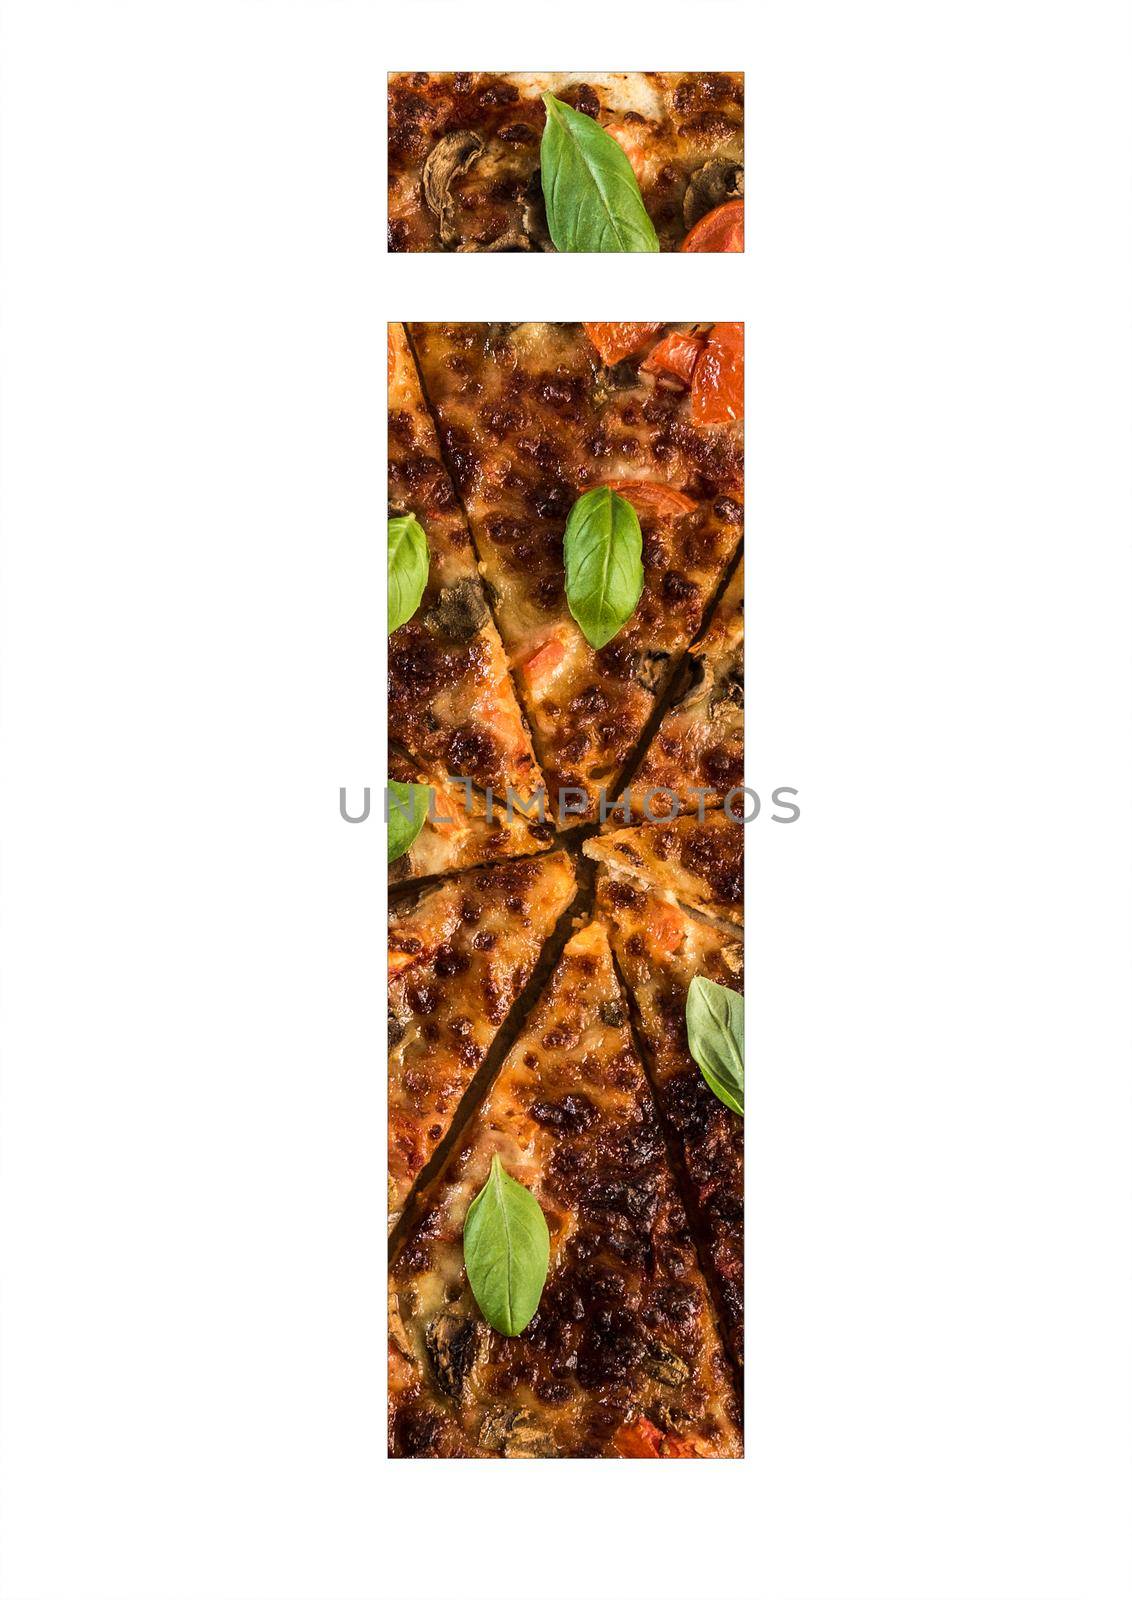 Vegetarian pizza with mushrooms by tan4ikk1